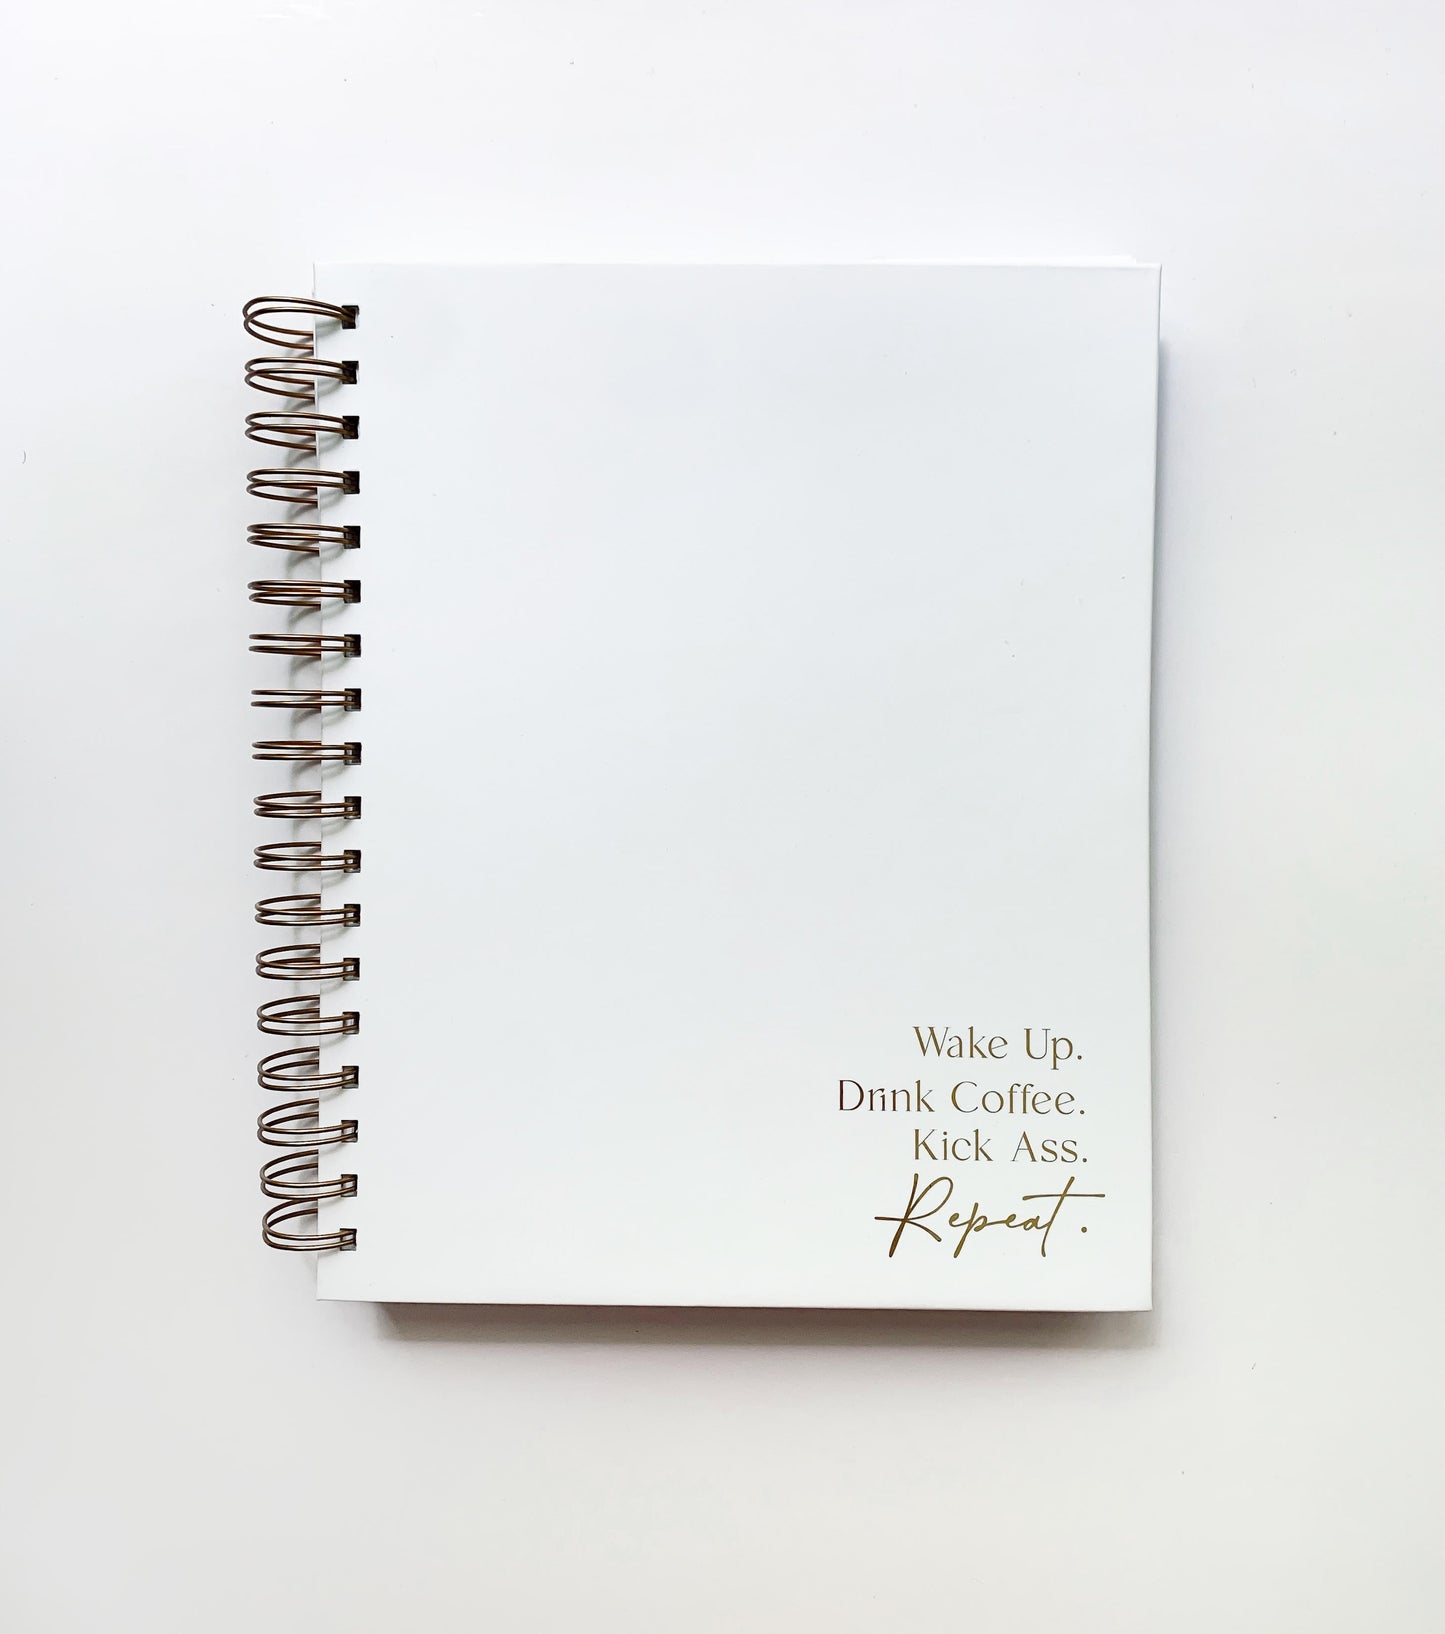 White Notebook